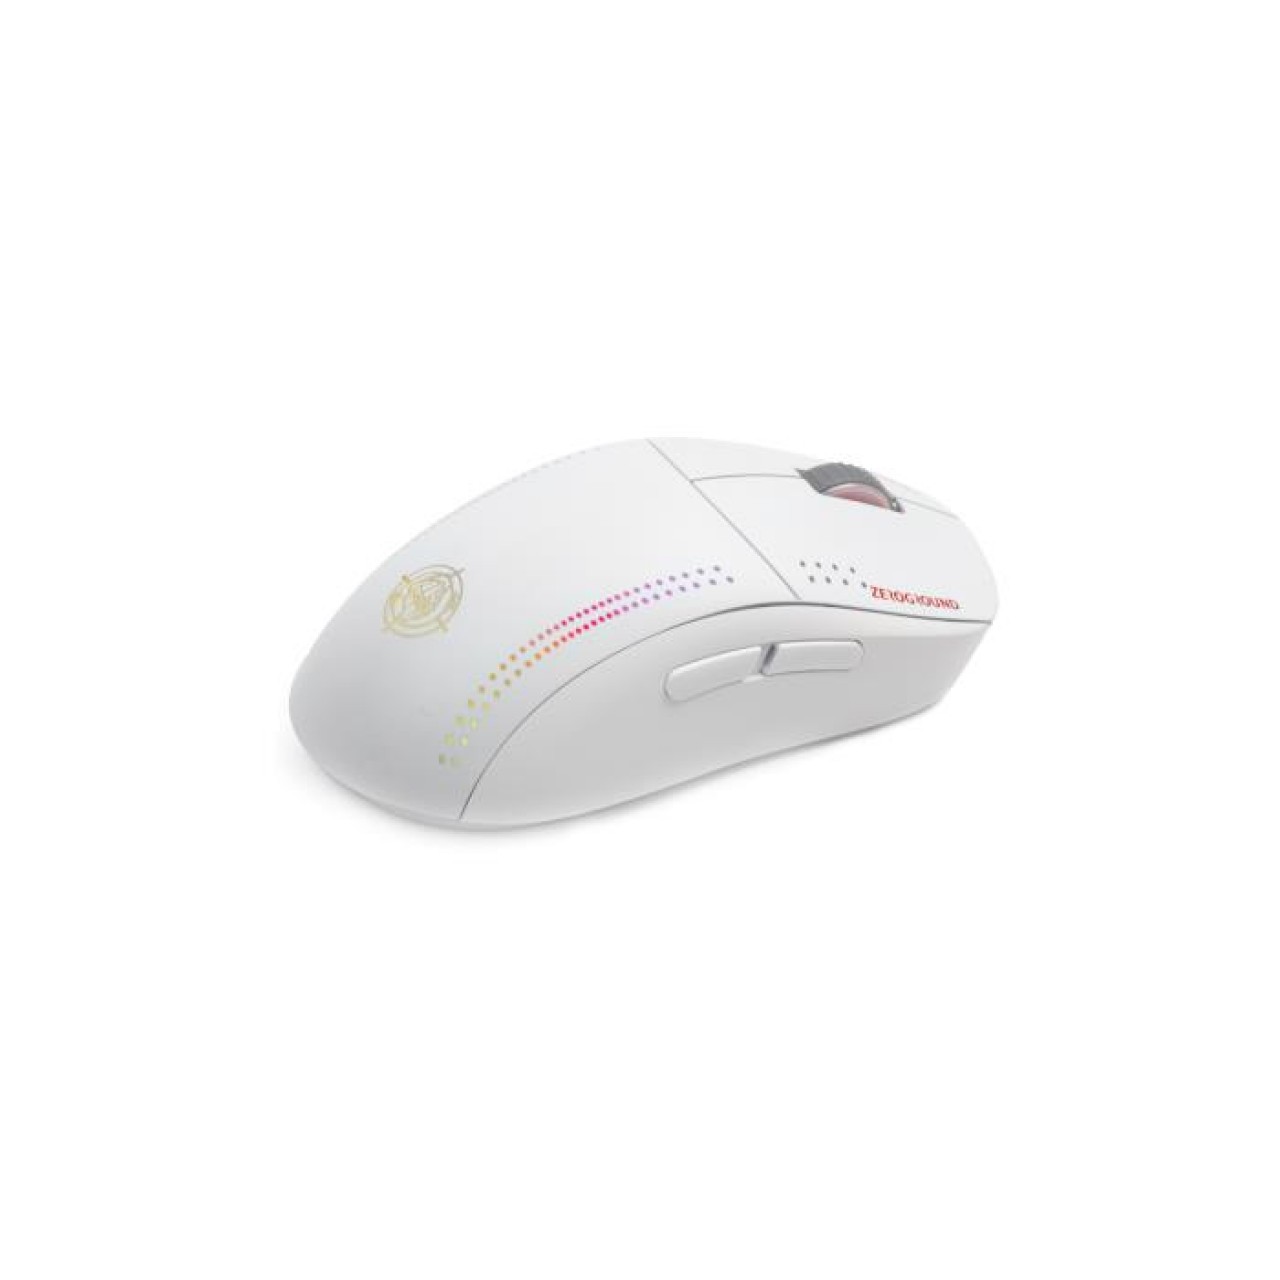 Mouse Wired/Wireless Zeroground RGB MS-4300WG KIMURA v3.0 White